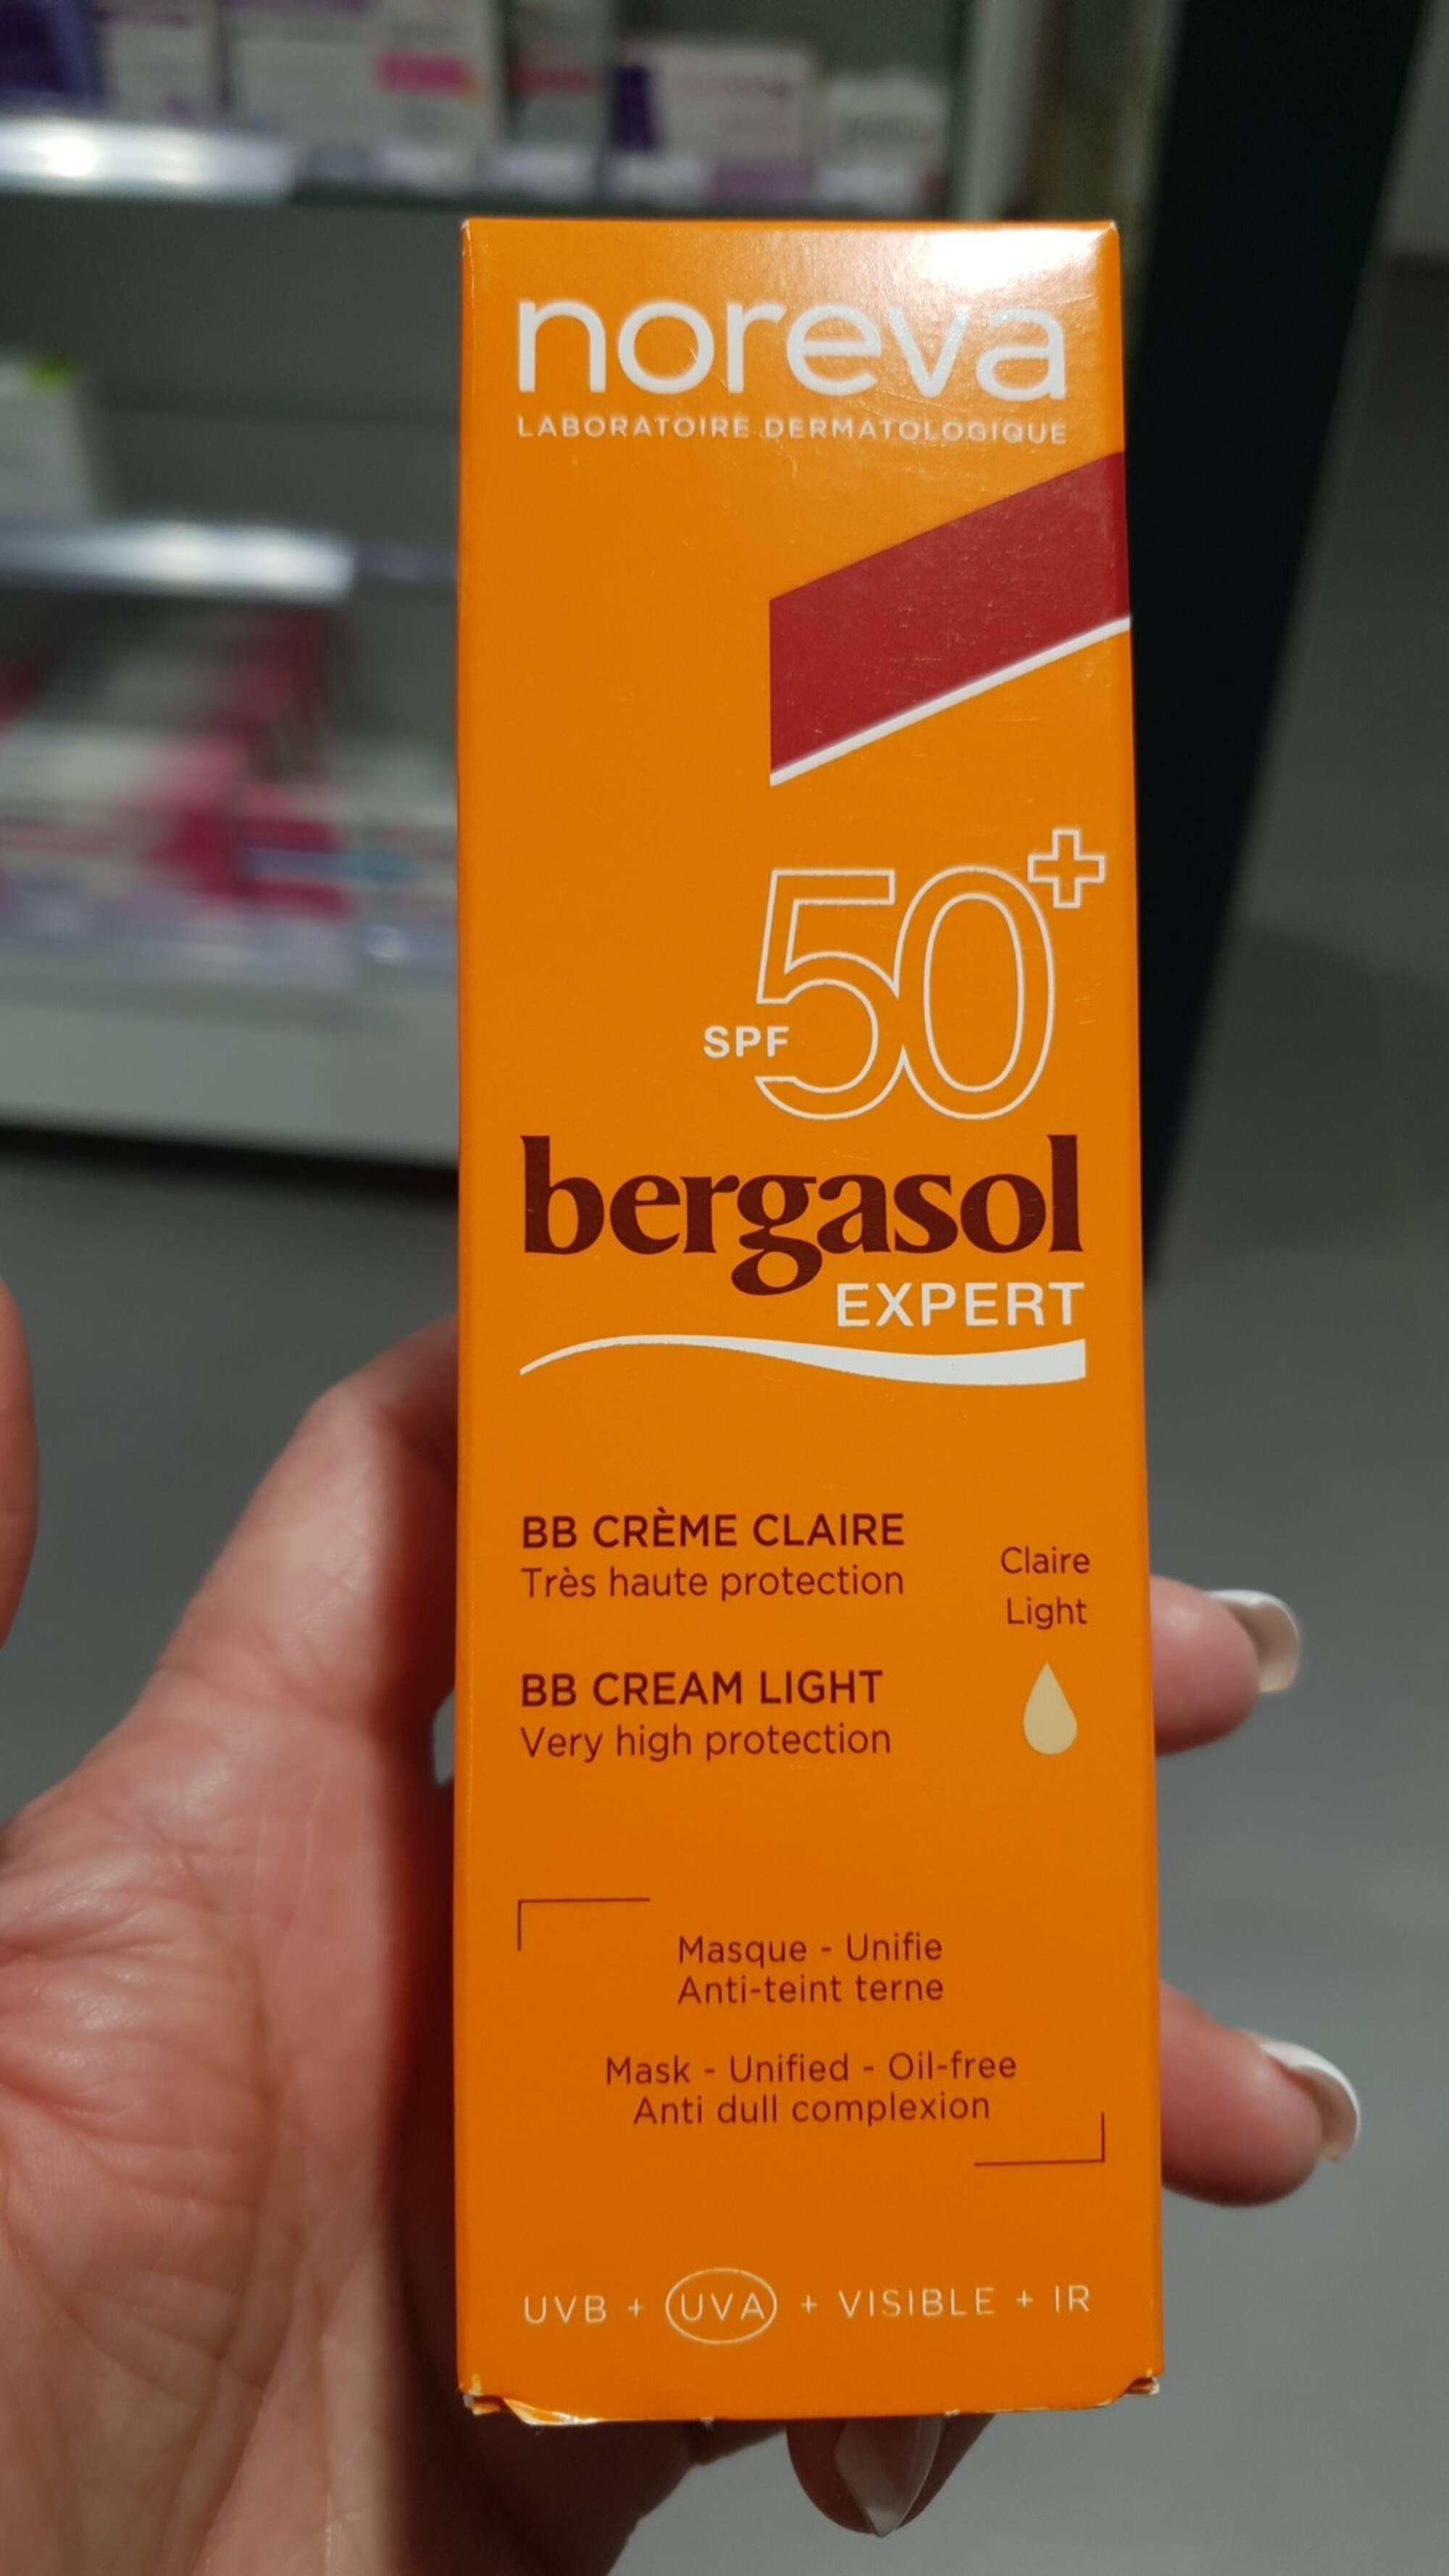 NOREVA - Bergasol expert - BB Crème claire SPF 50+